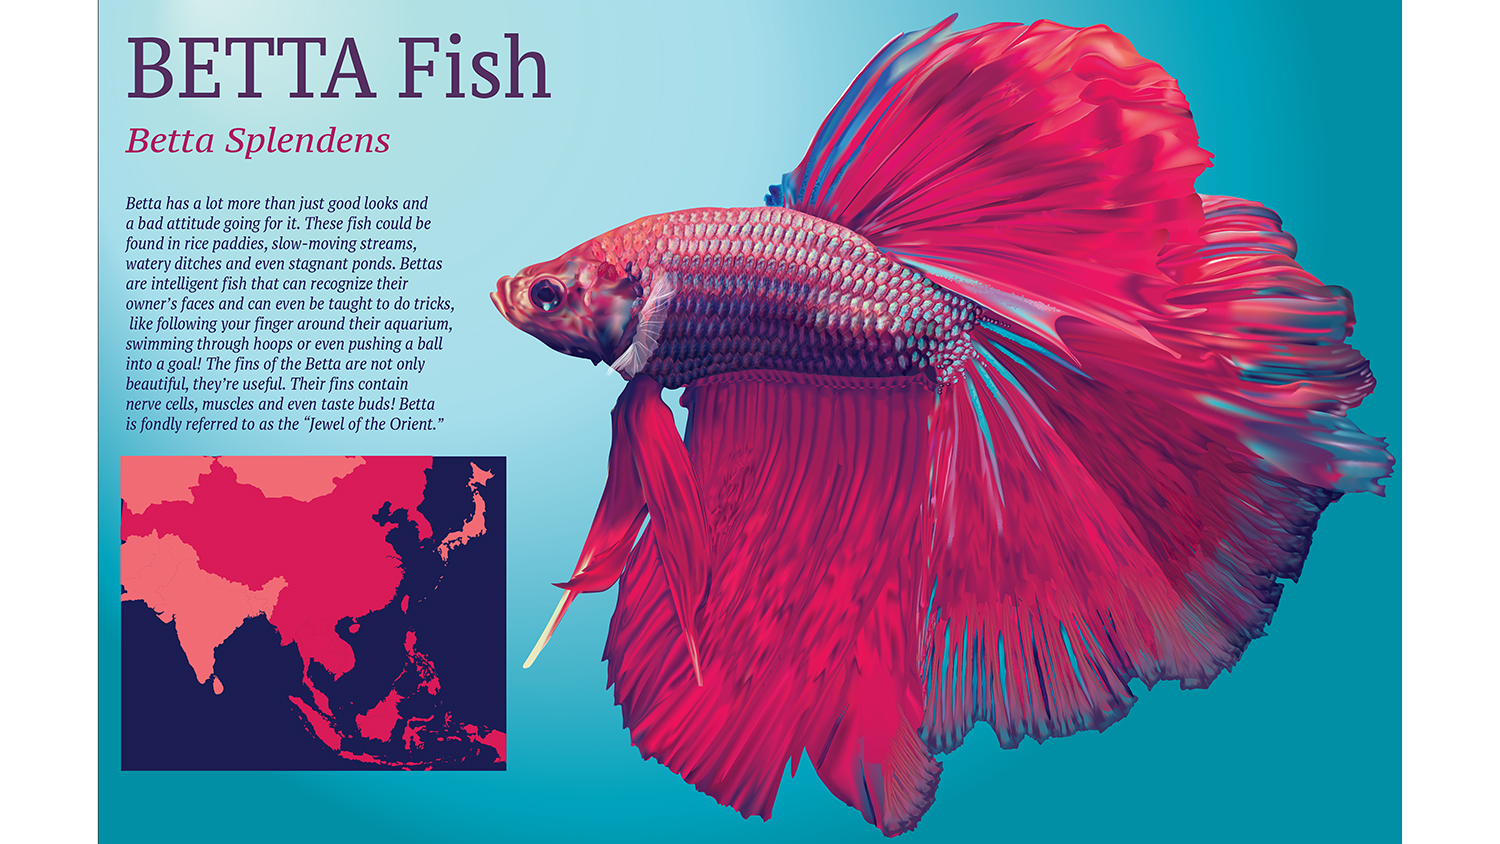 An illustration of a betta fish